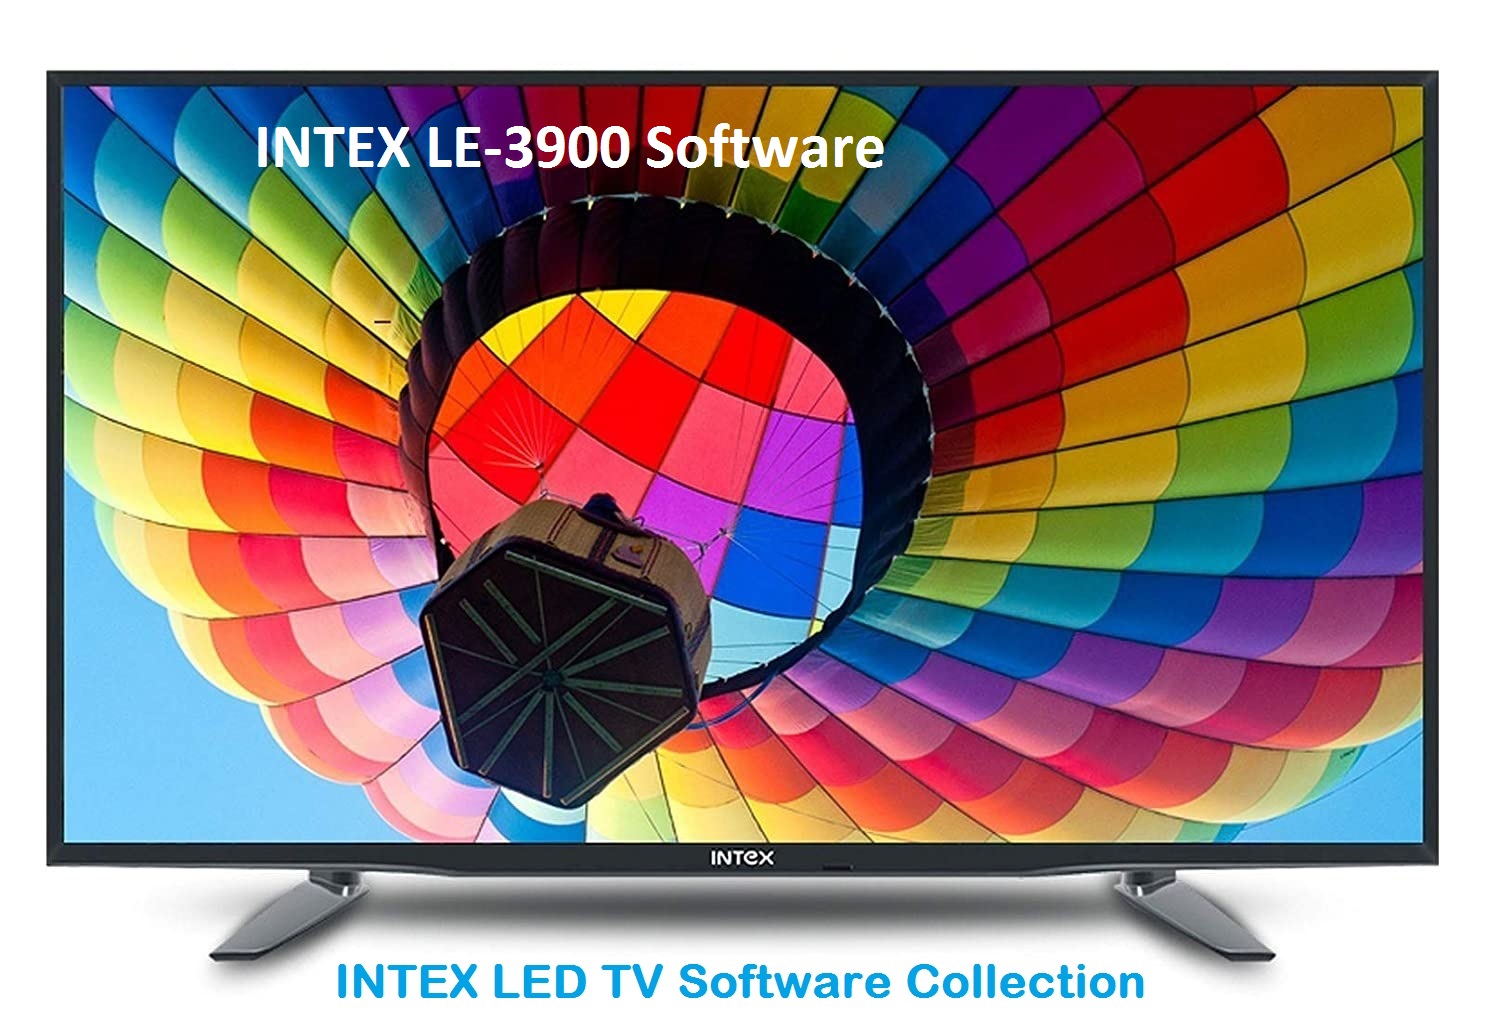 Intex Le-3900